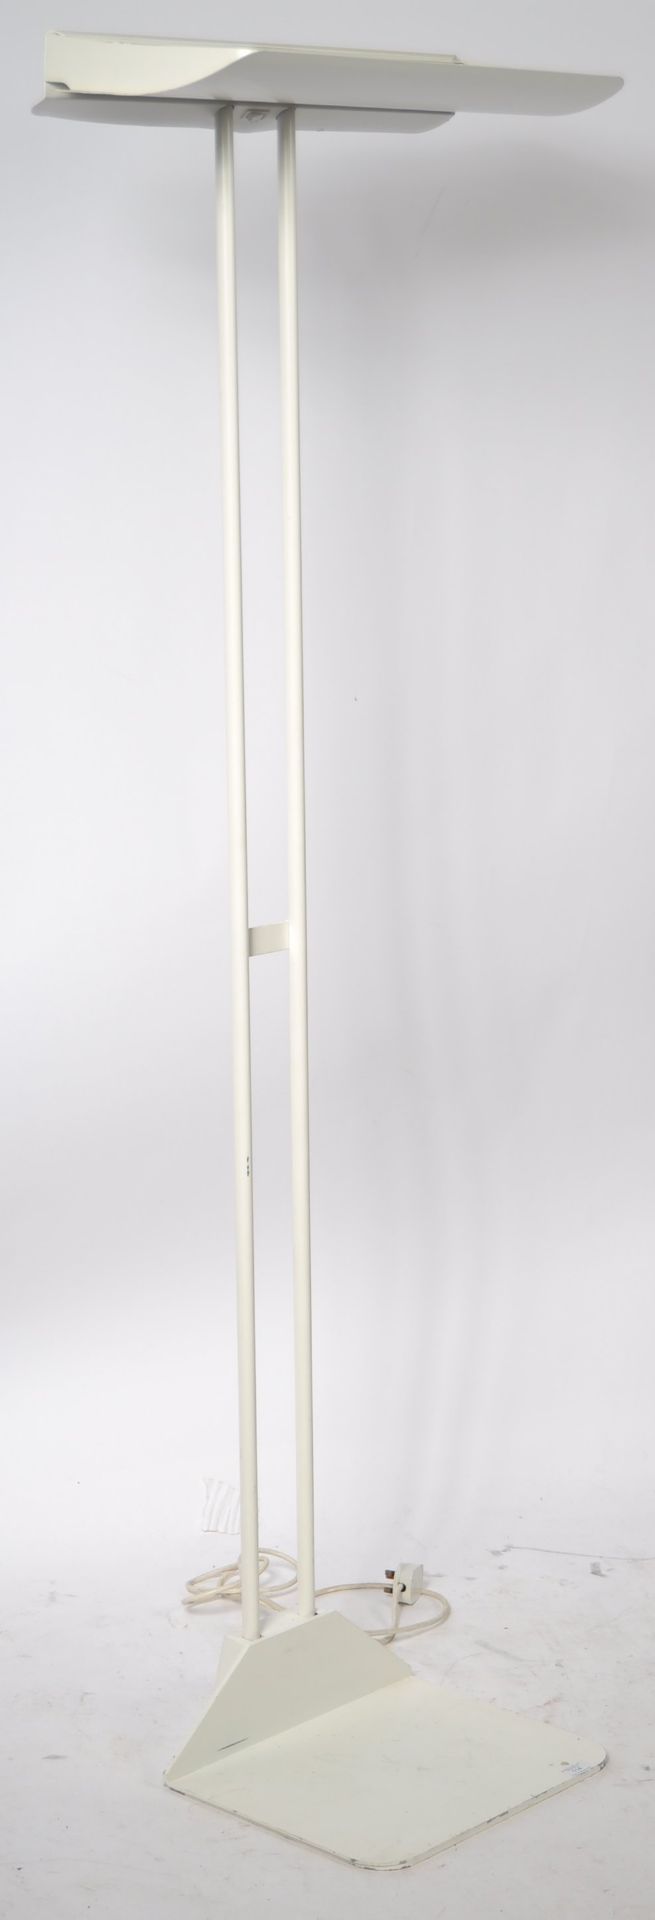 THORN 20TH CENTURY ART DECO STYLE UPLIGHTER STANDARD LAMP